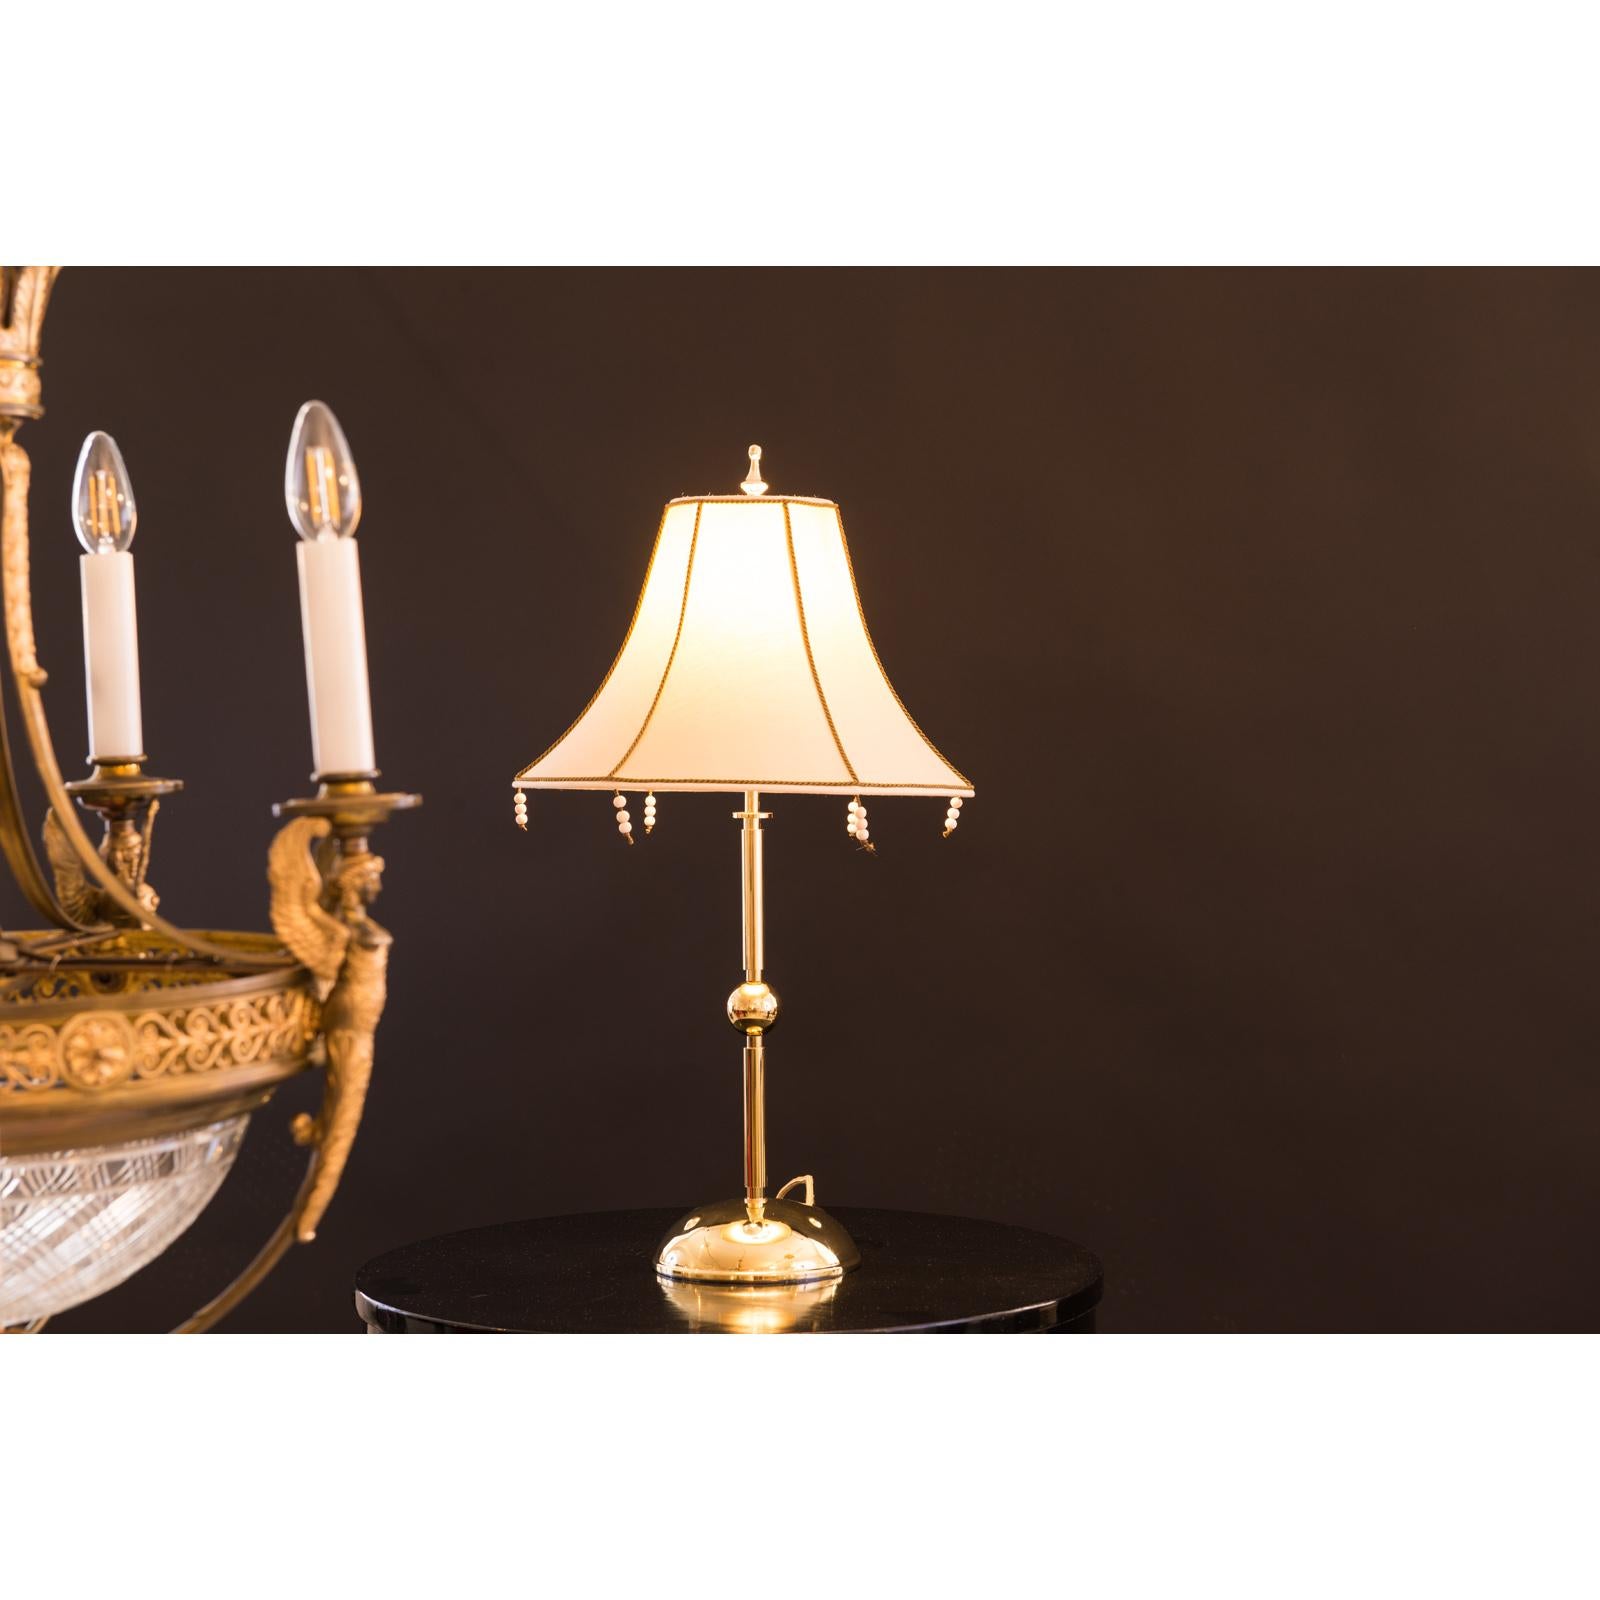 Hand-Crafted Josef Hoffmann & Wiener Werkstäette Jugendstil Art Nouveau Table Lamp Re-Edition For Sale